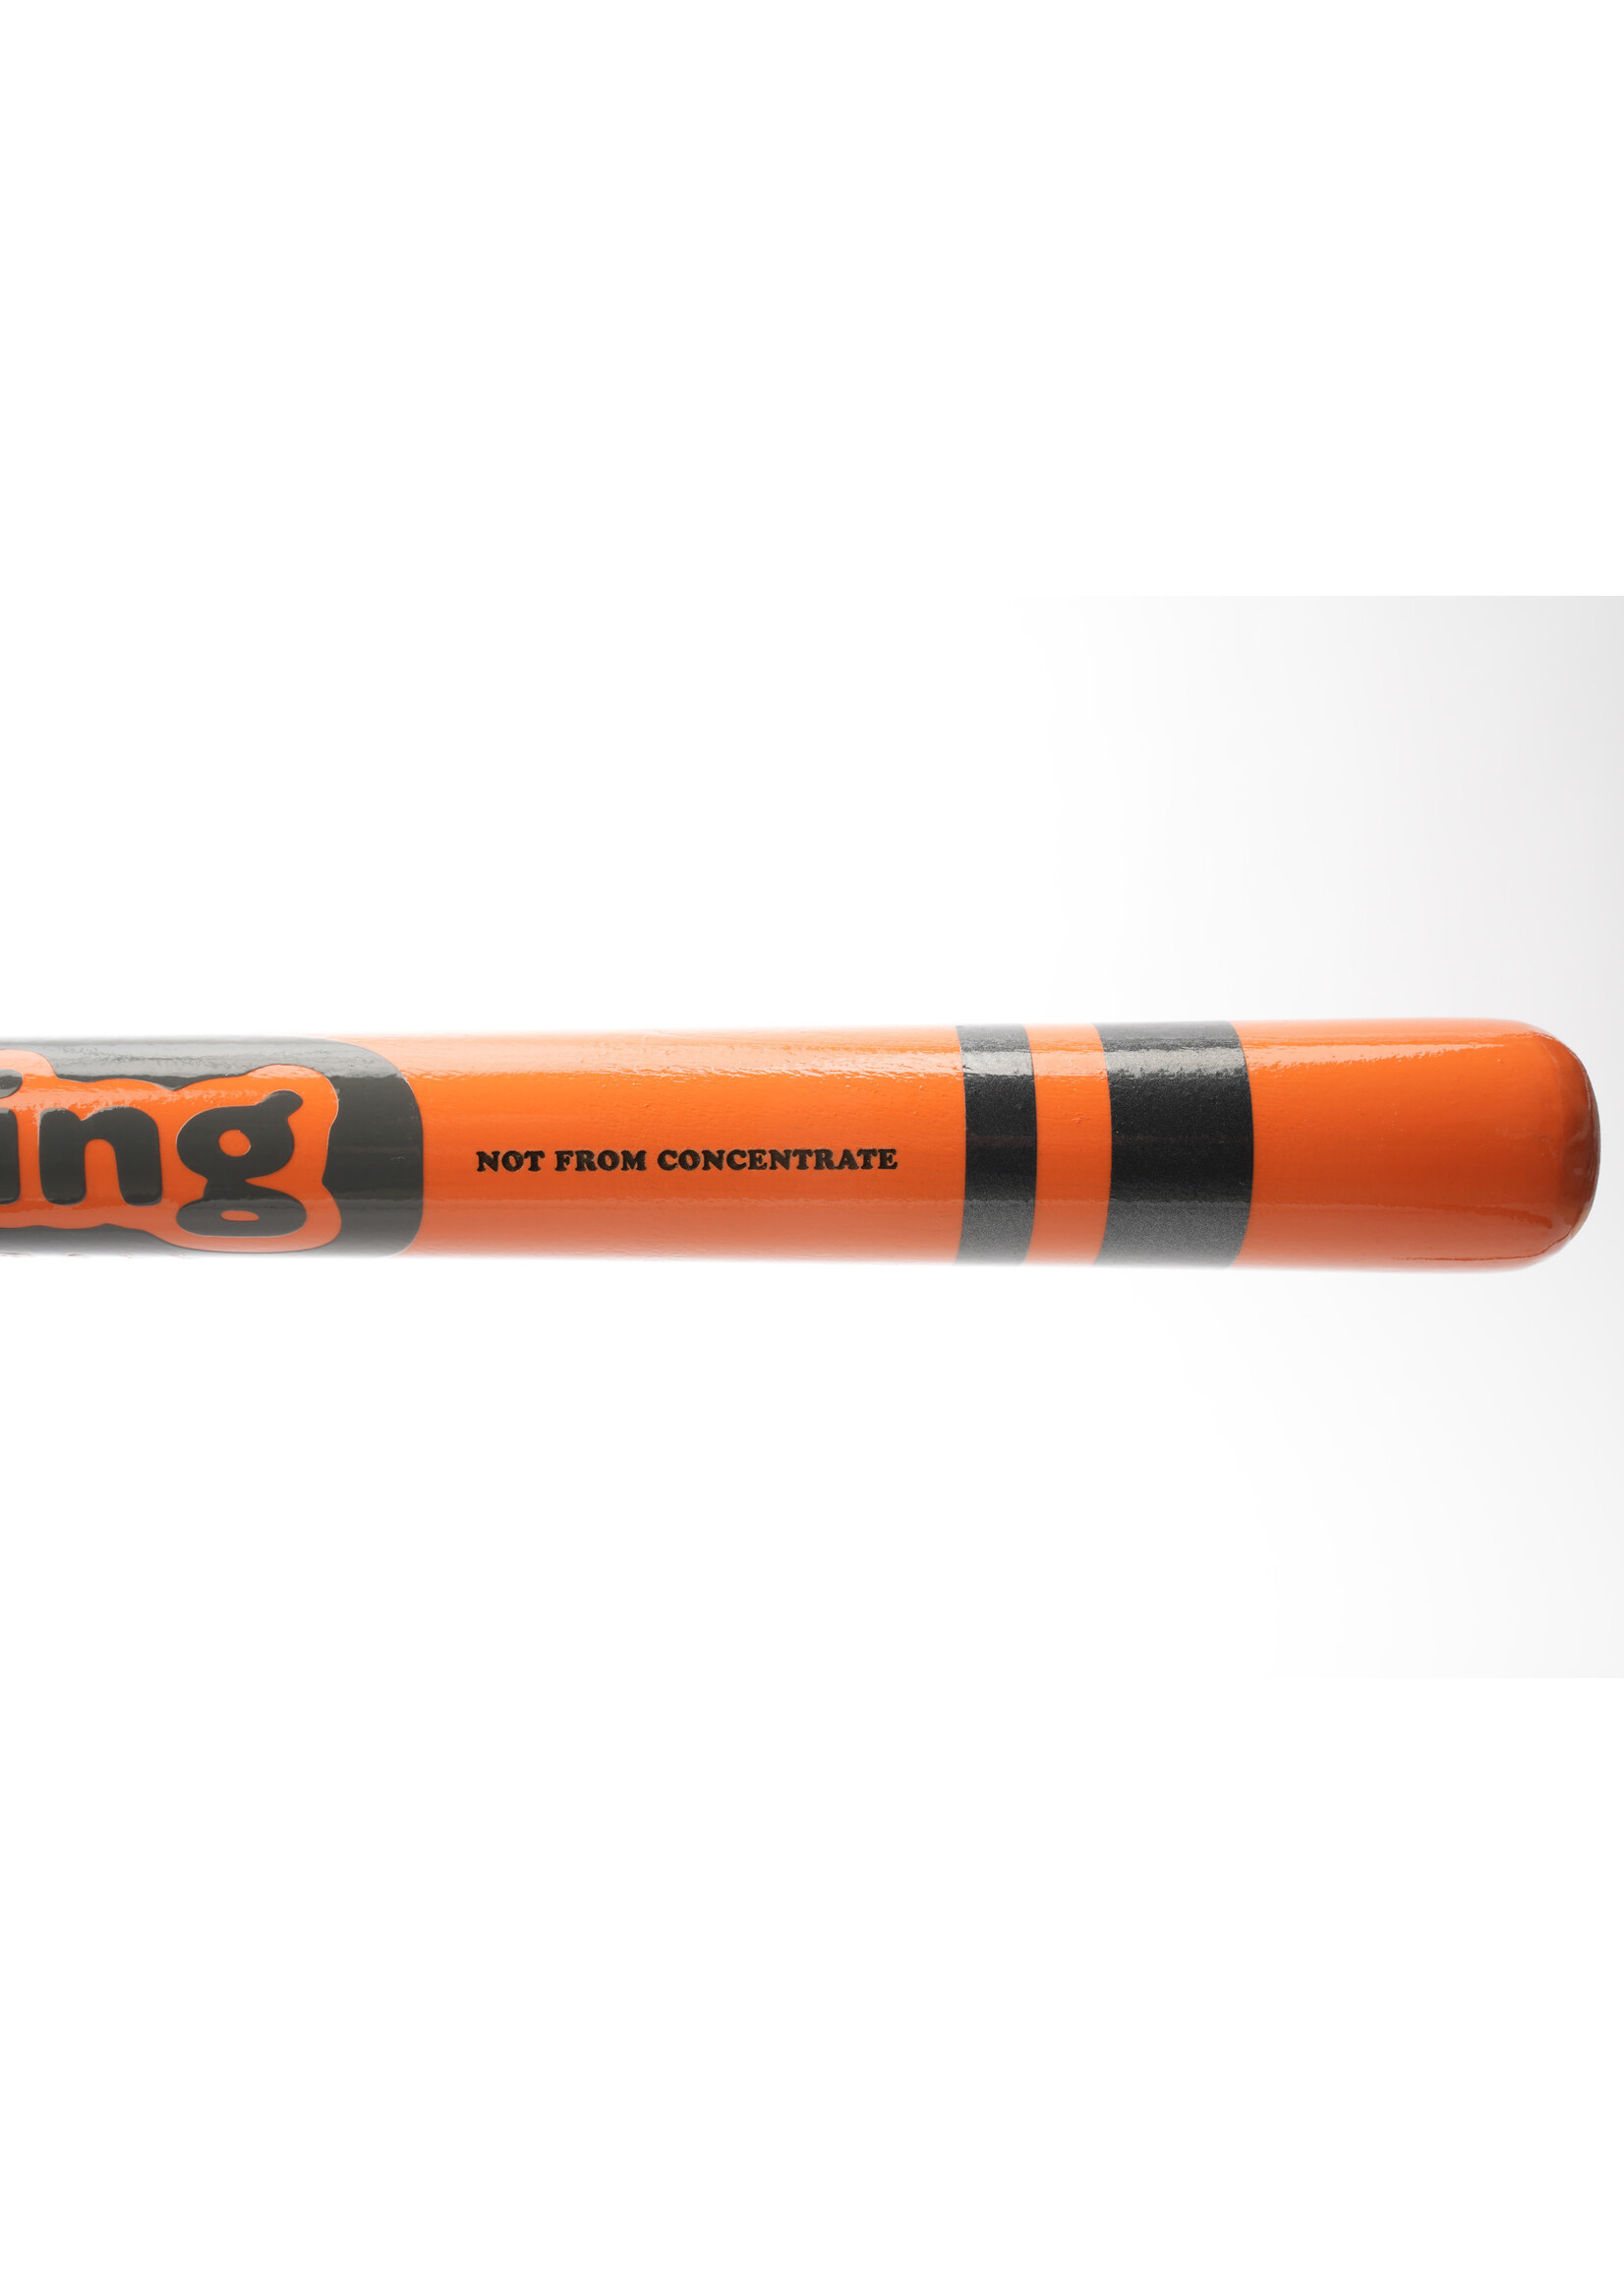 Bush League Bats Elite Series Wood Wiffleball Bat - Crayon: Orange